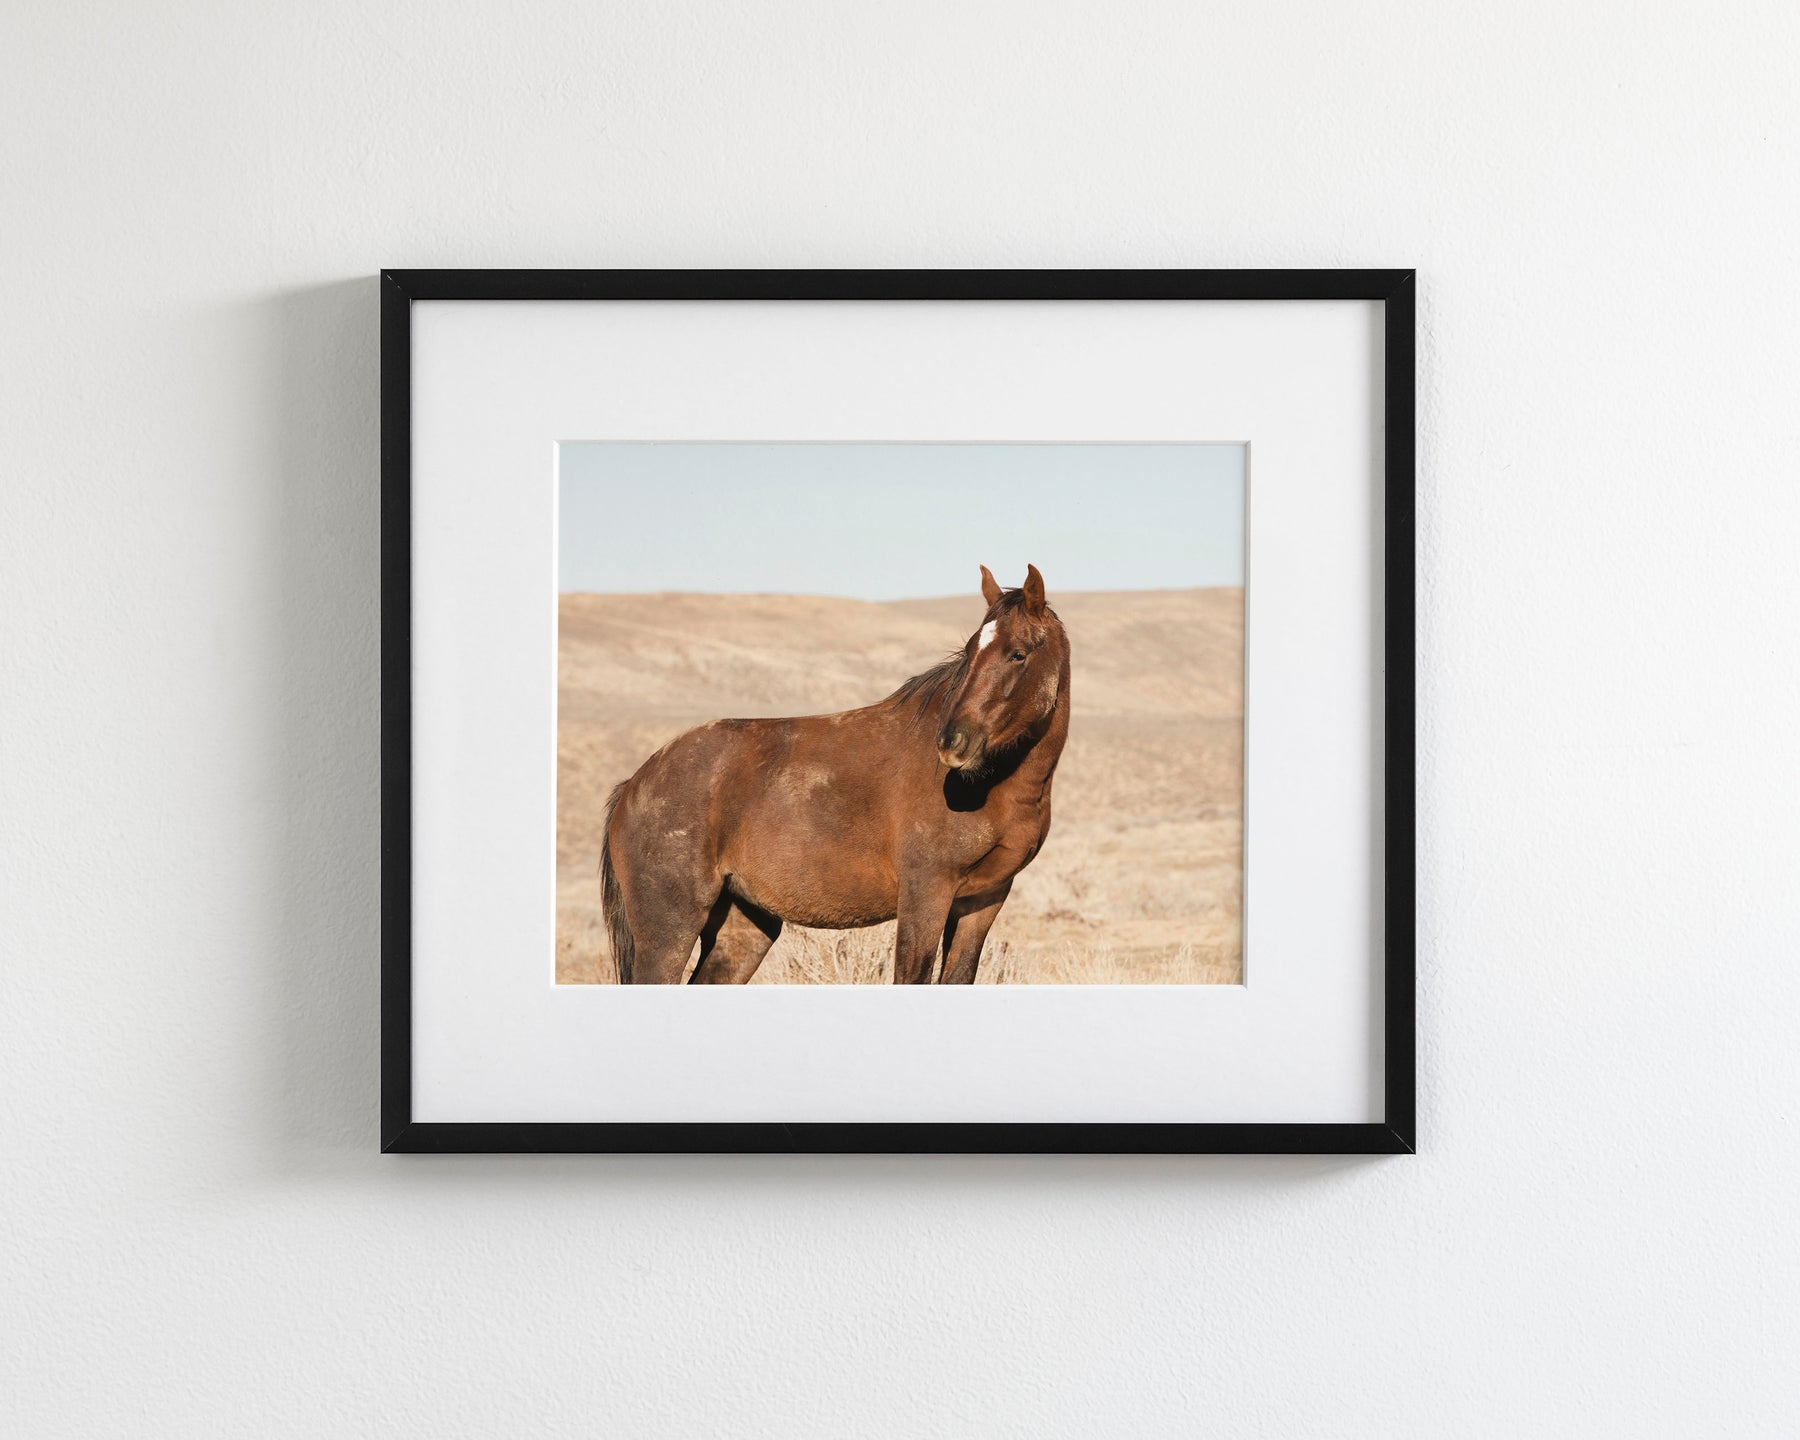 Guard- Wild Stallion Photograph